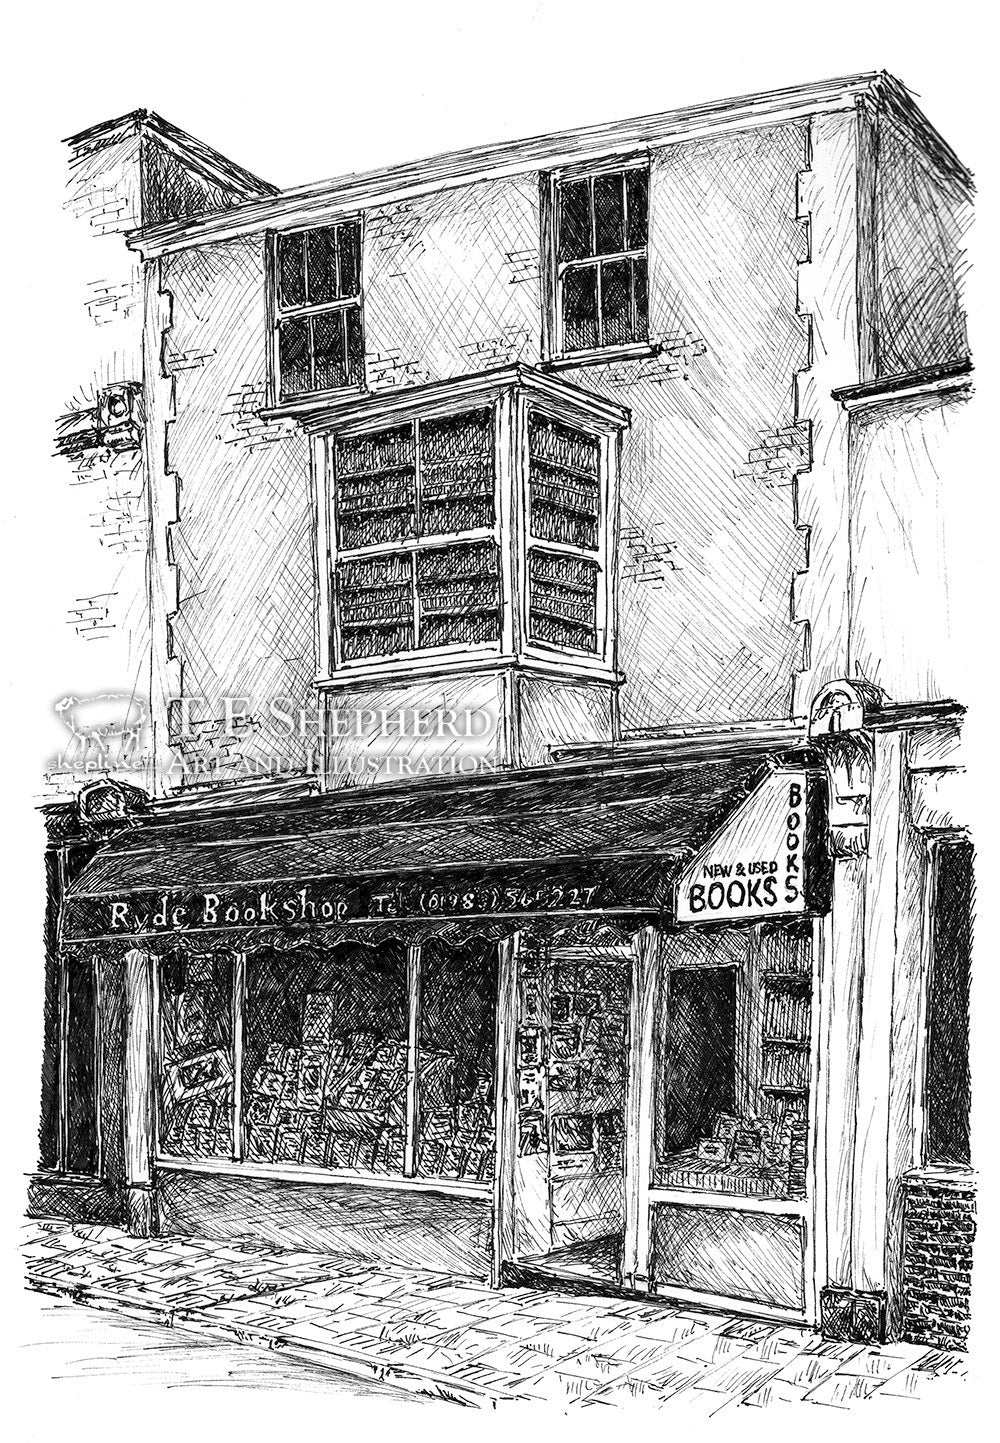 Ryde Bookshop, Isle of Wight *Original*